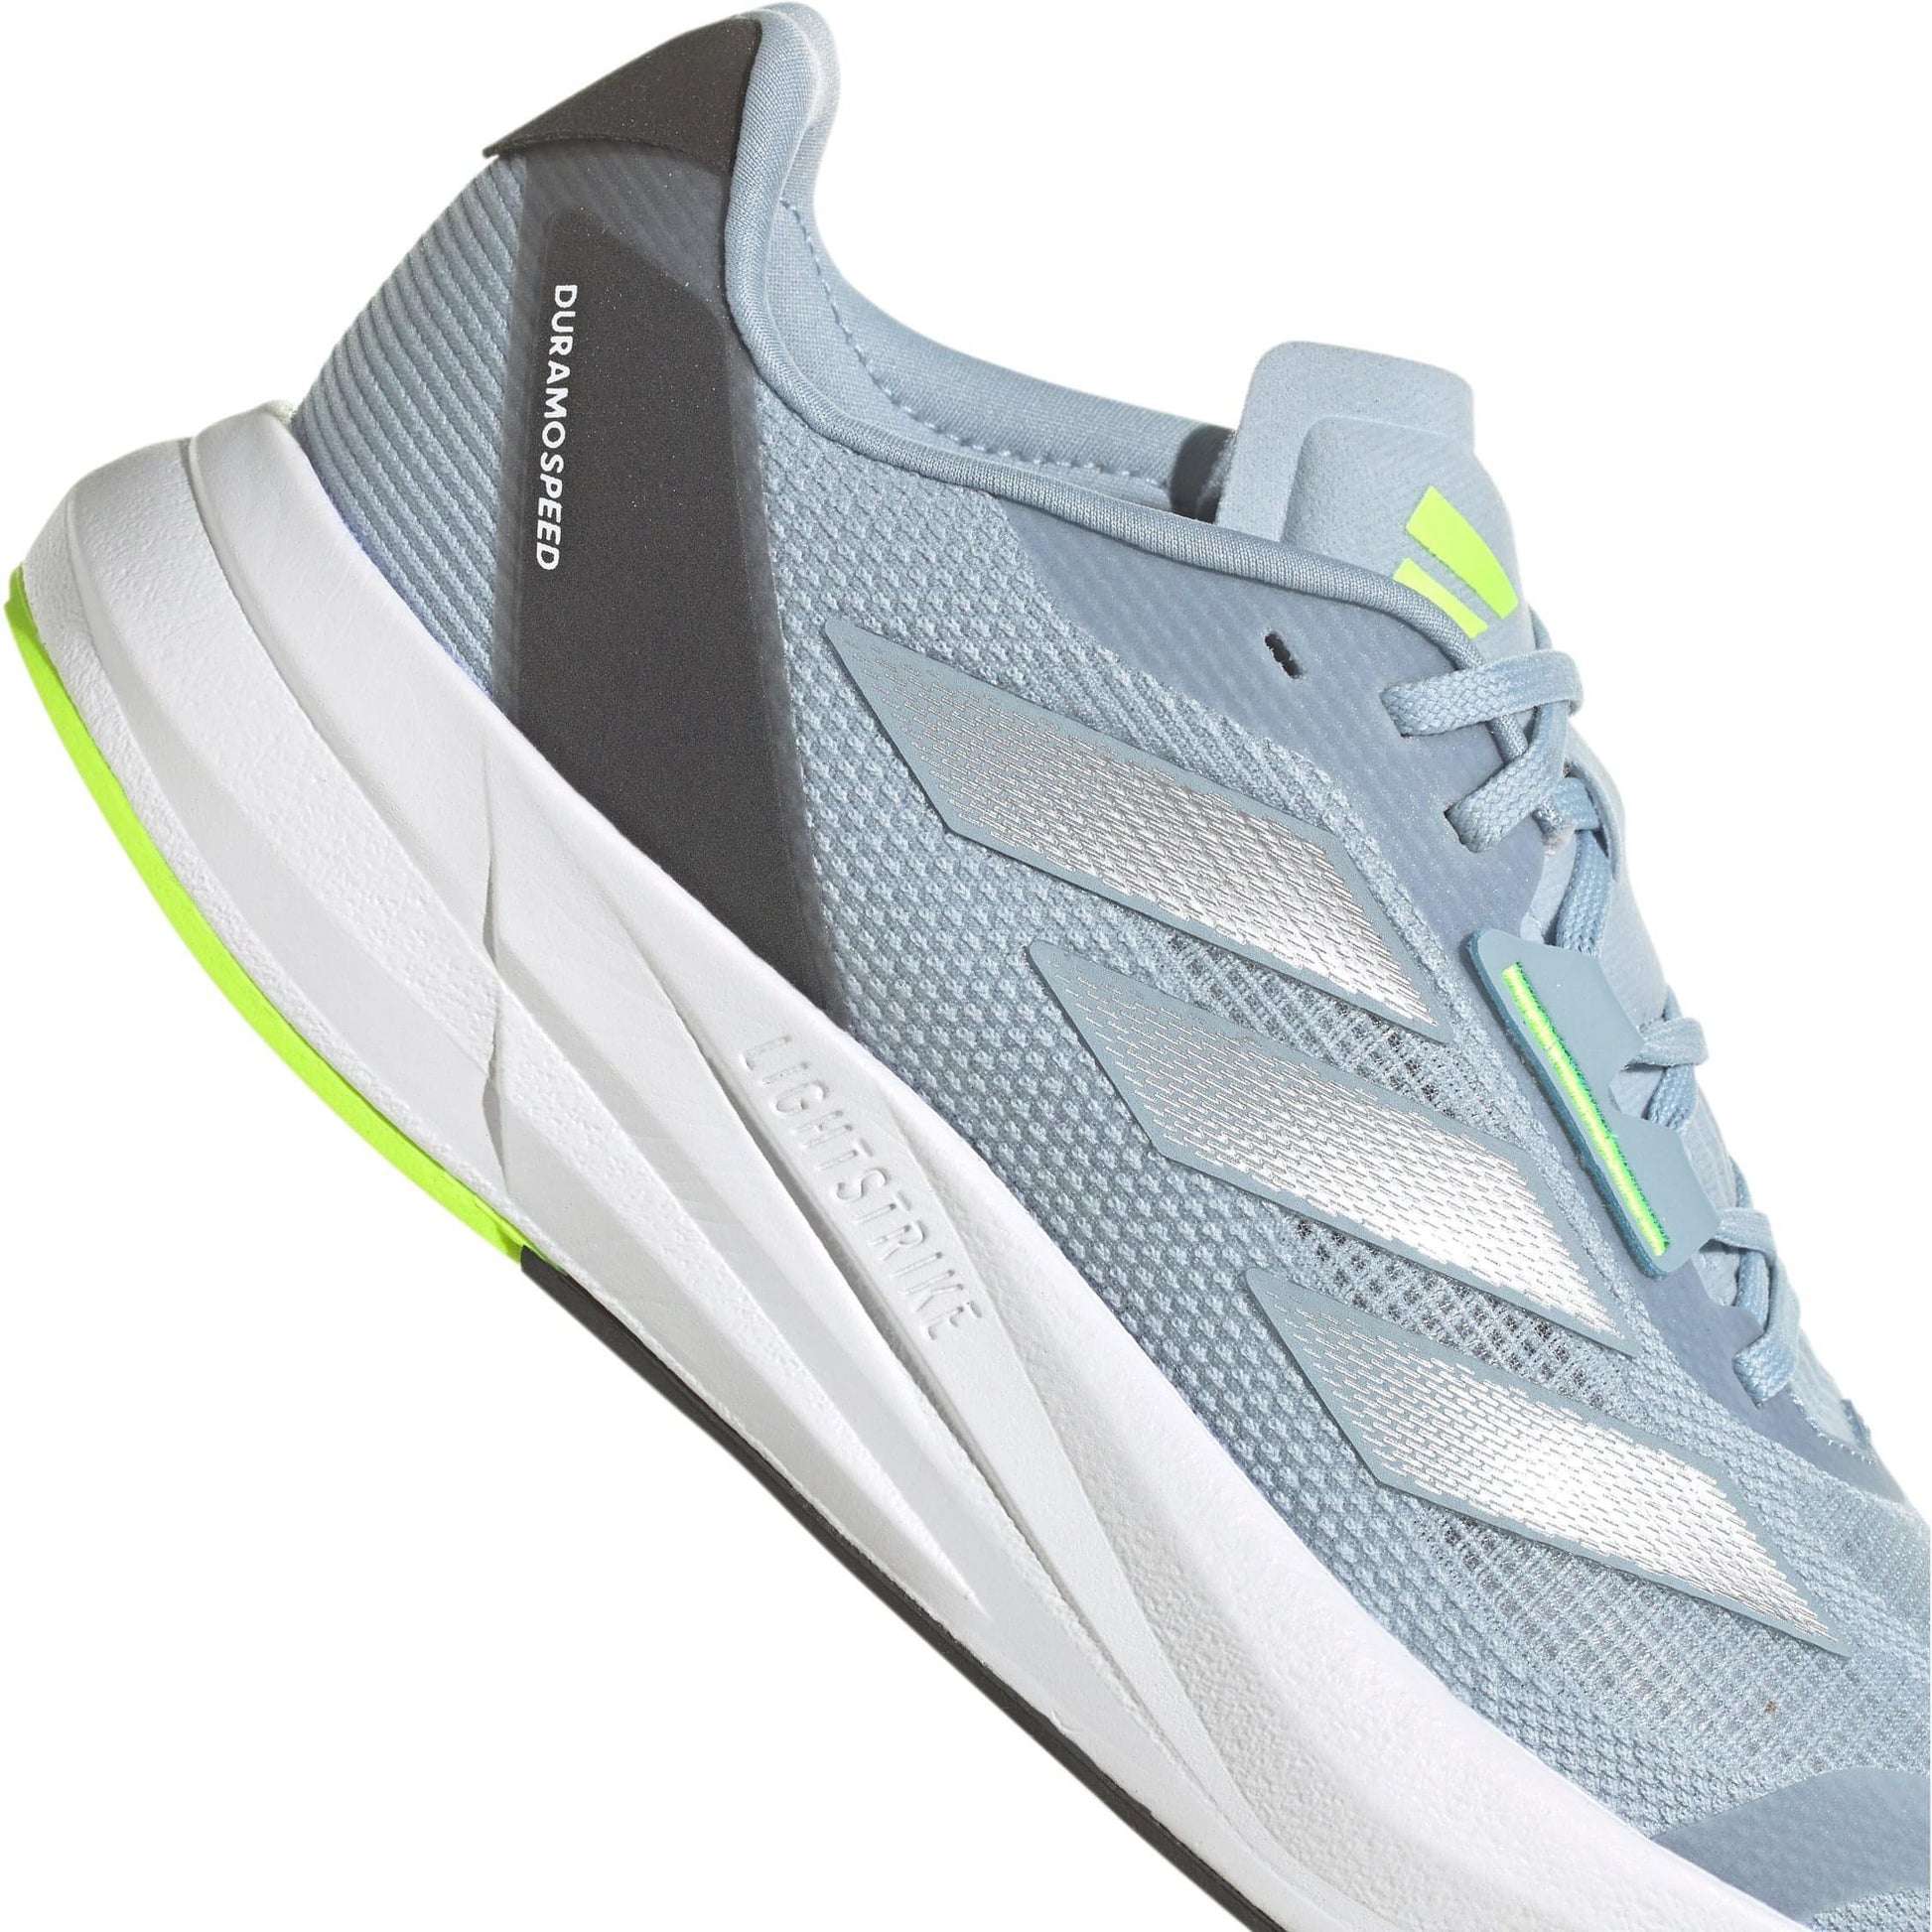 Adidas Duramo Speed Shoes Ie9686 Details